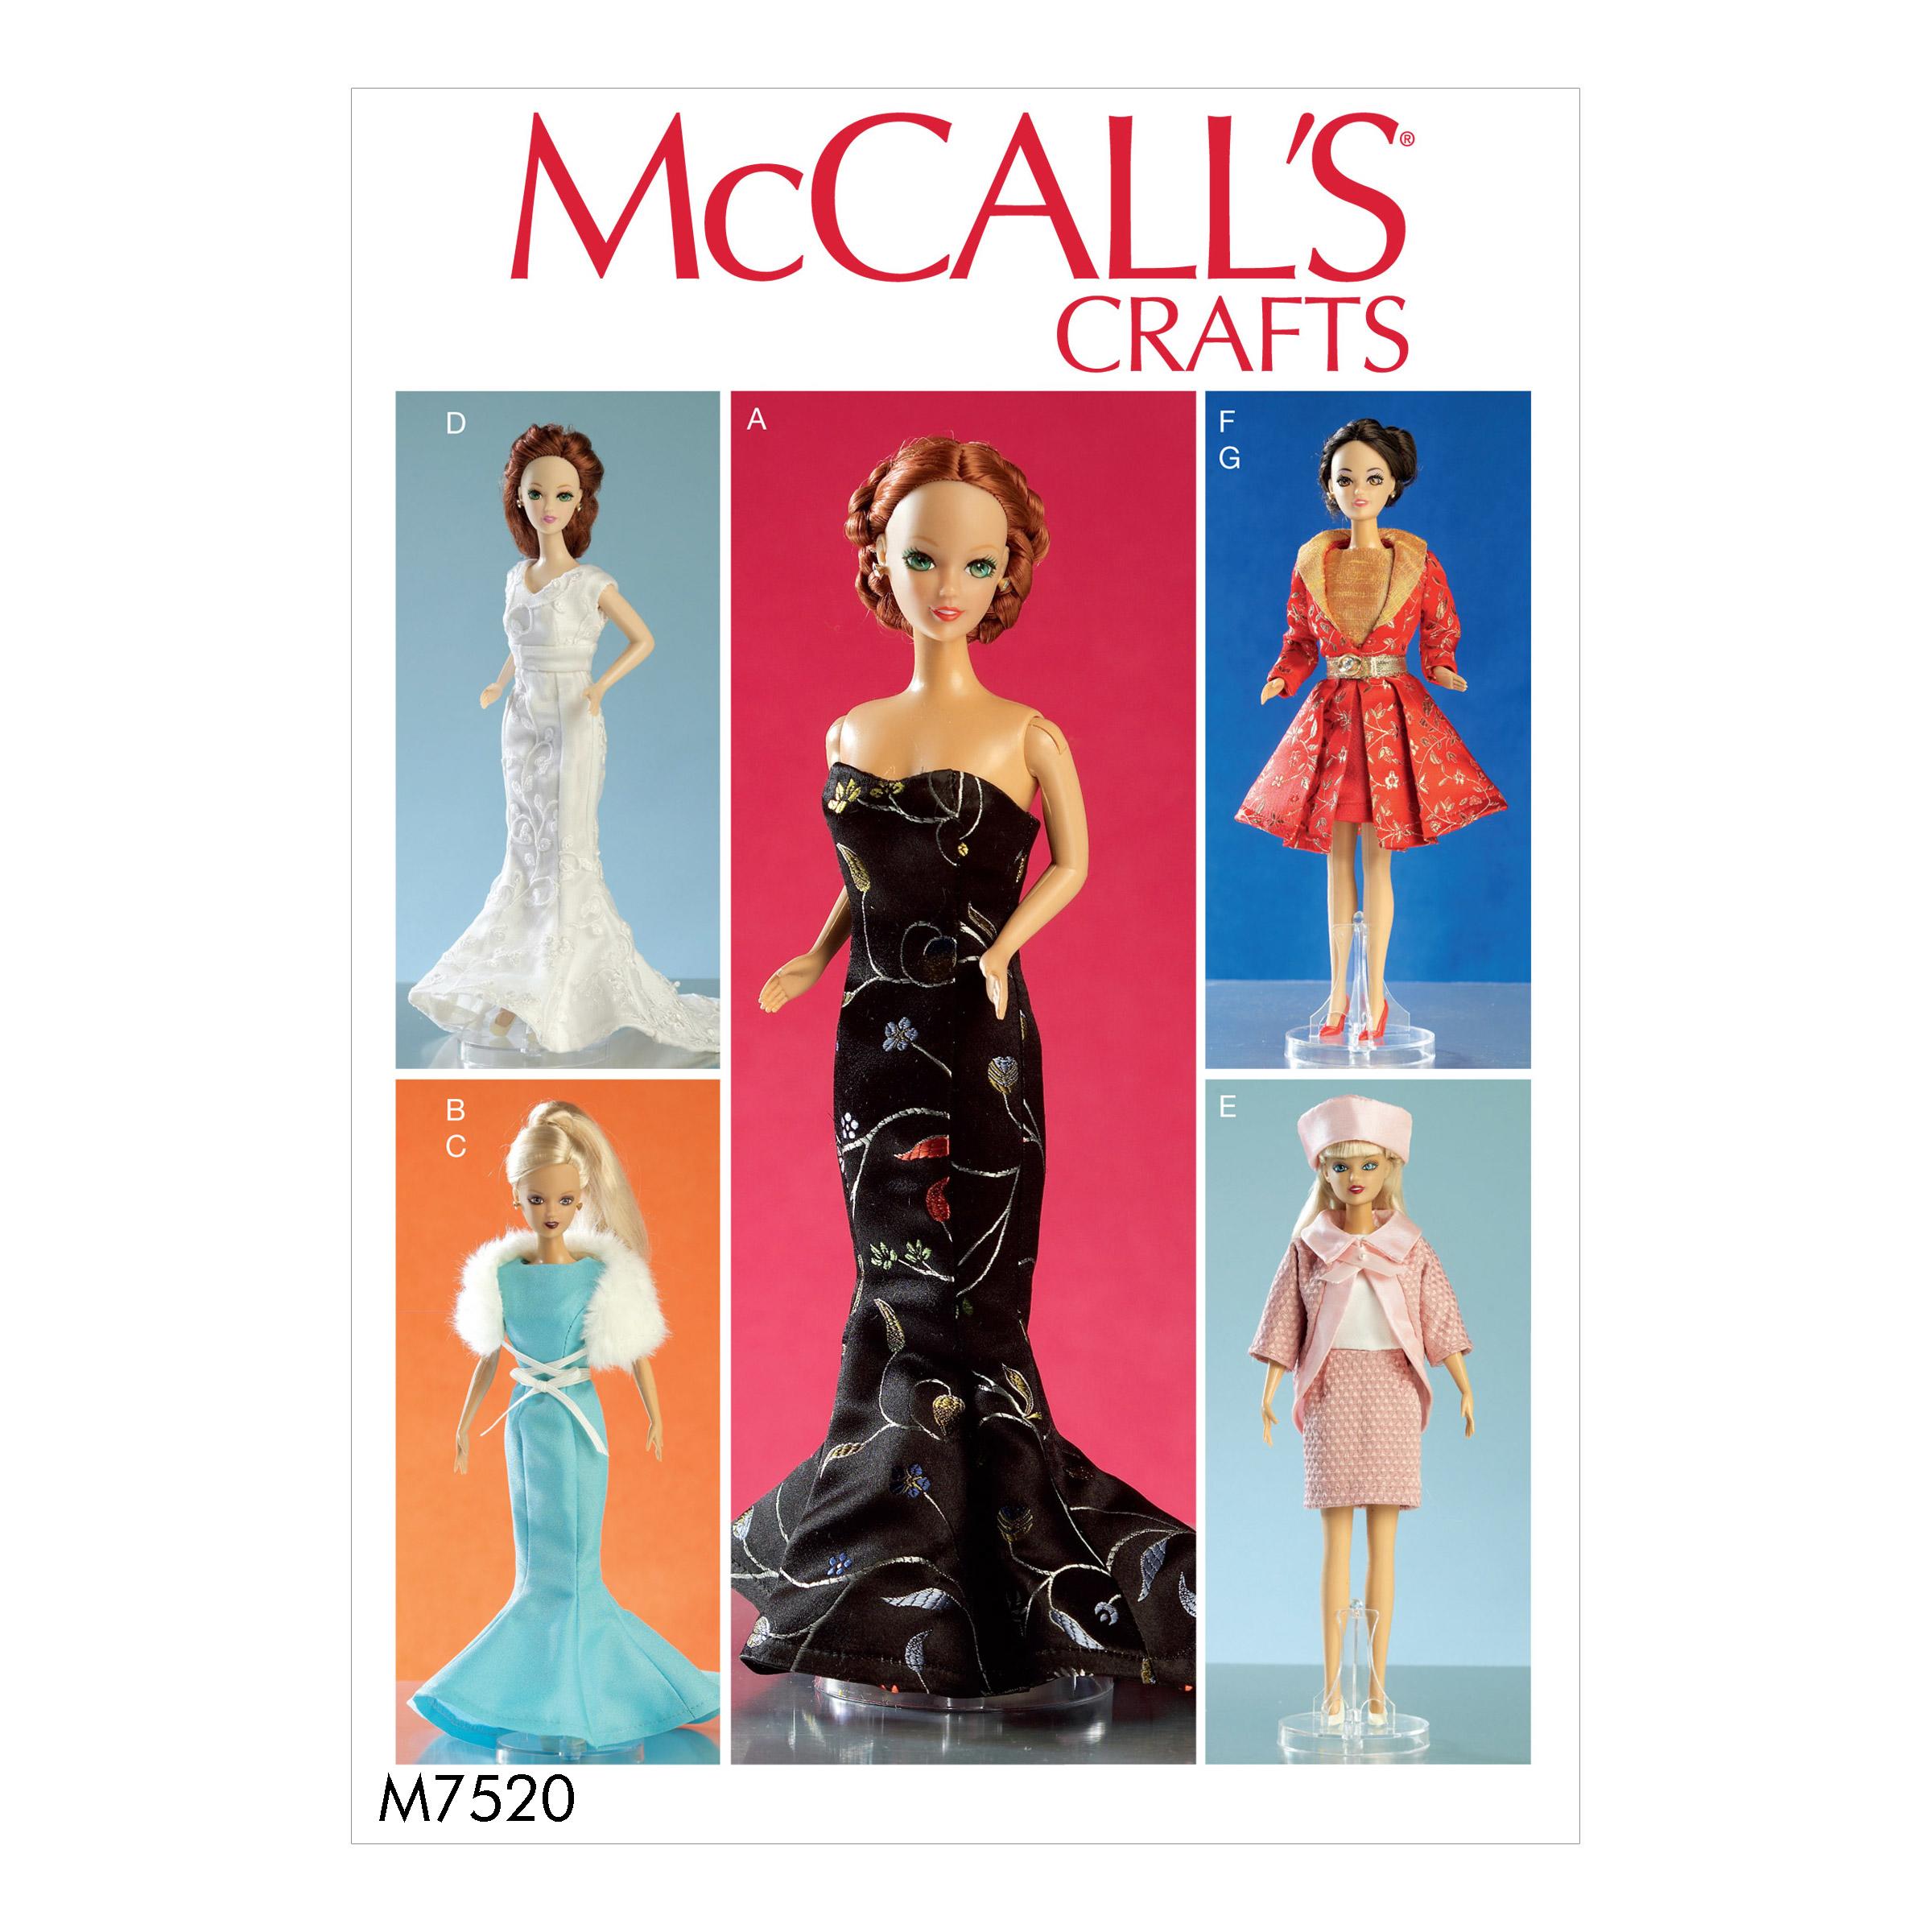 McCalls M7520 Crafts Dolls & Toys